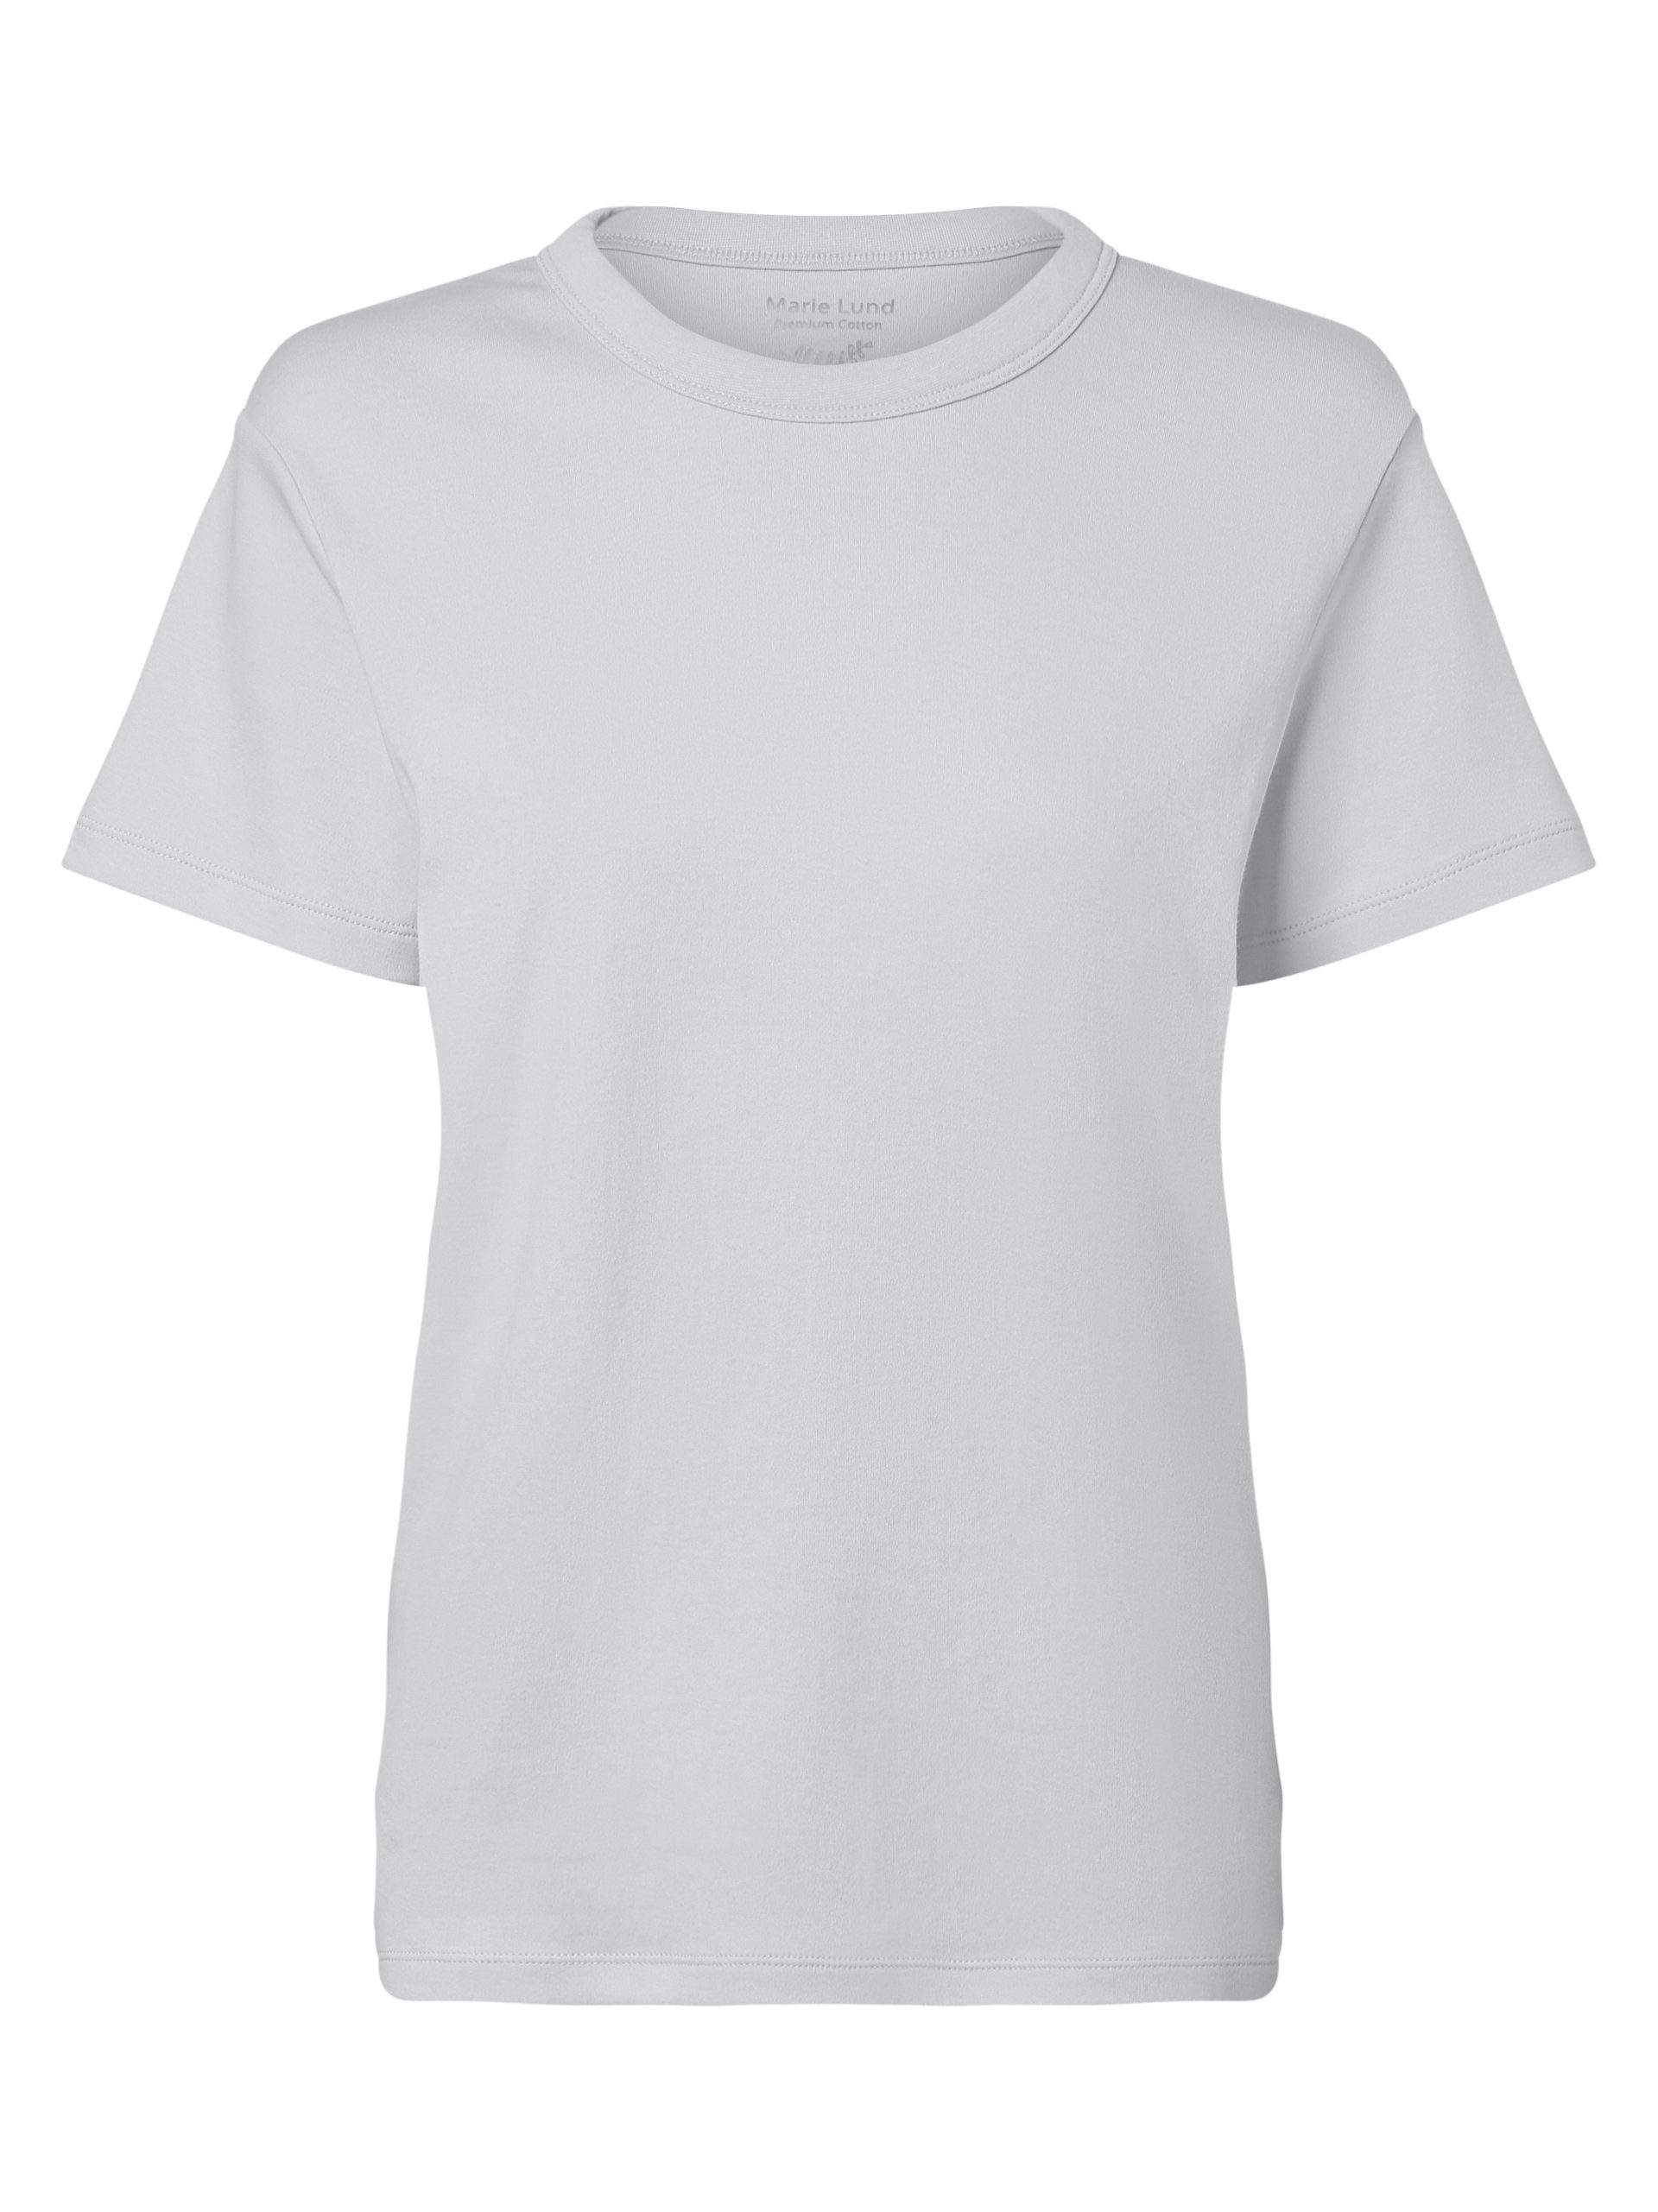 graublau Lund Marie T-Shirt